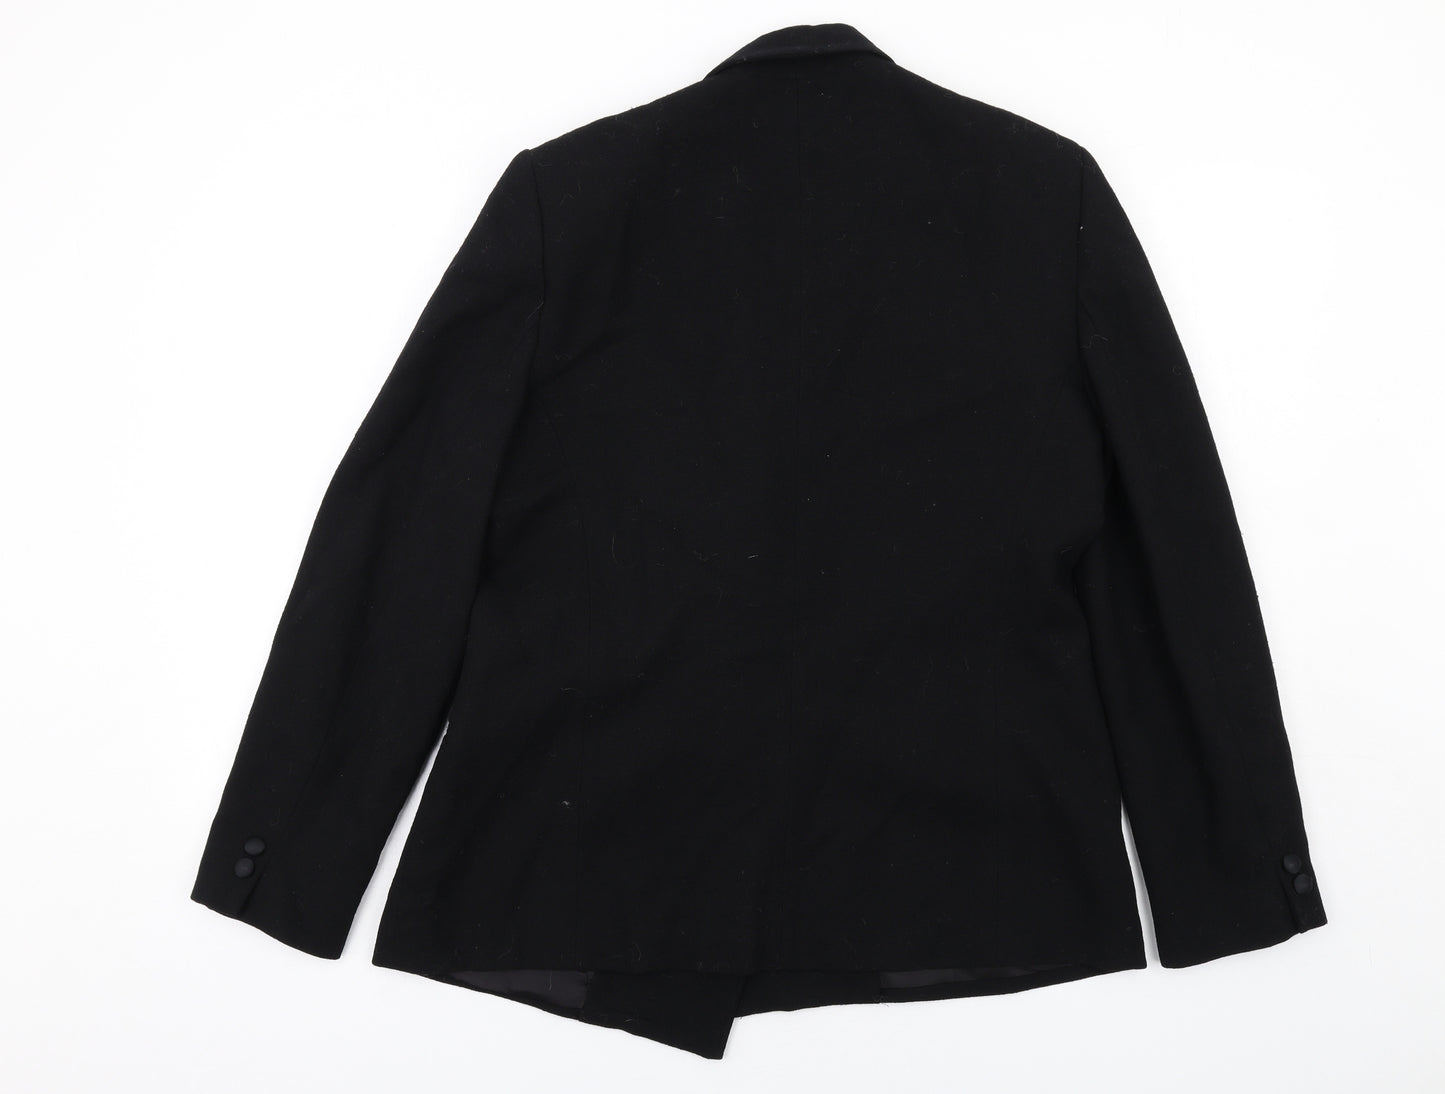 Jones New York Womens Black Polyester Jacket Blazer Size 14